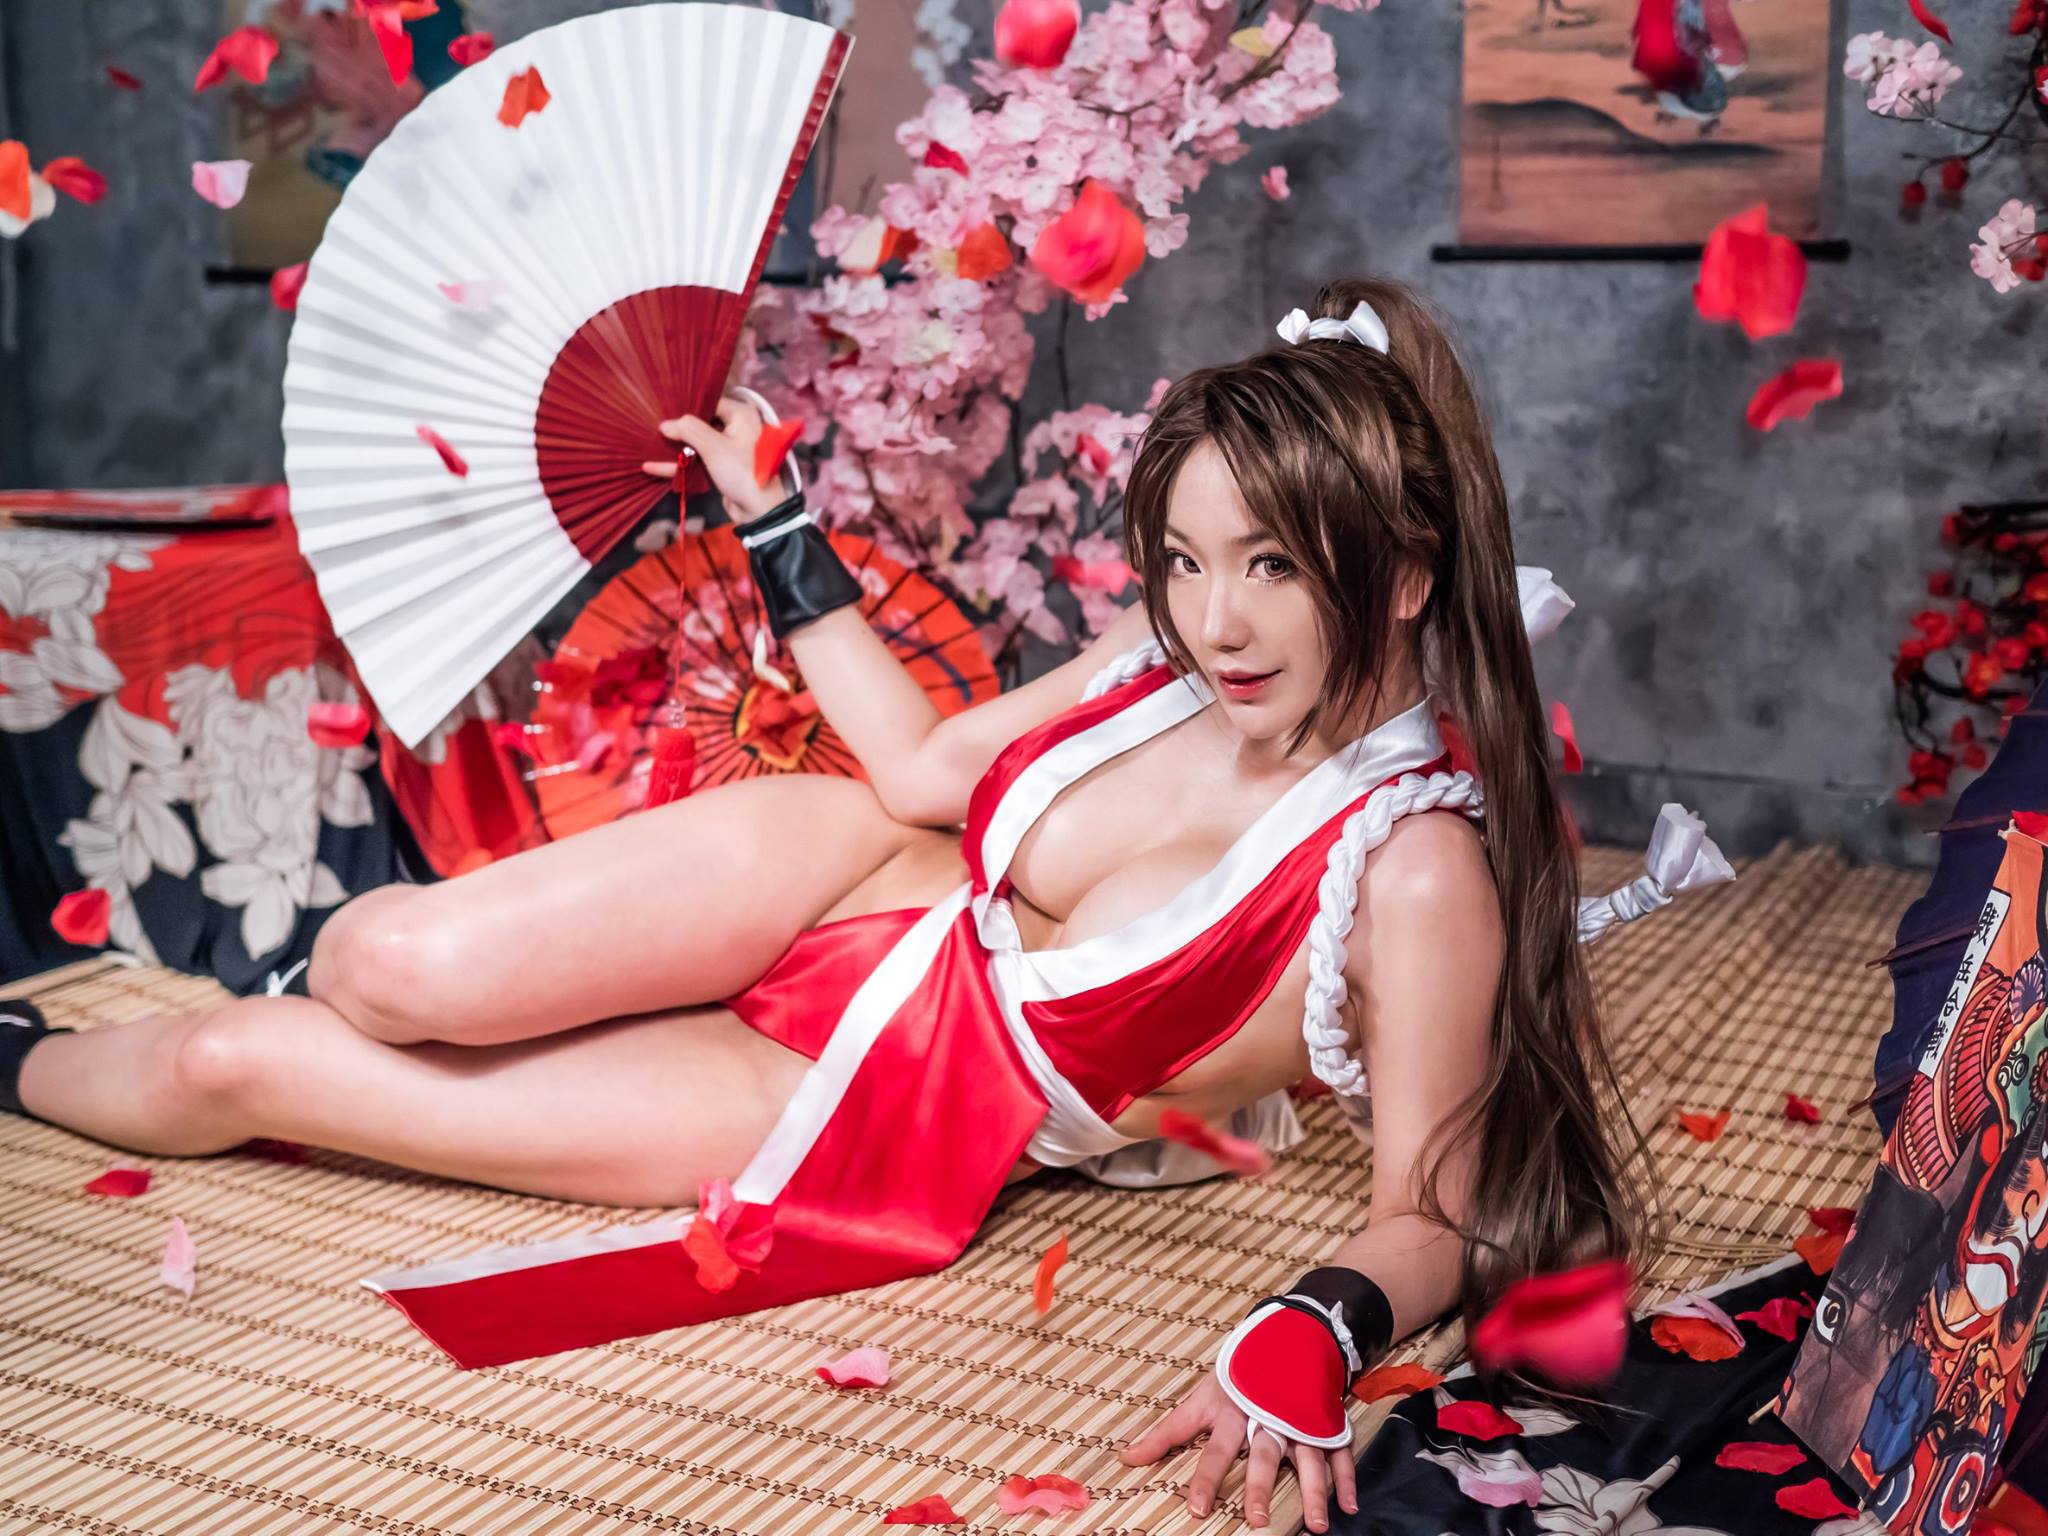 Korean maiden cosplay fuck hard free porn pictures